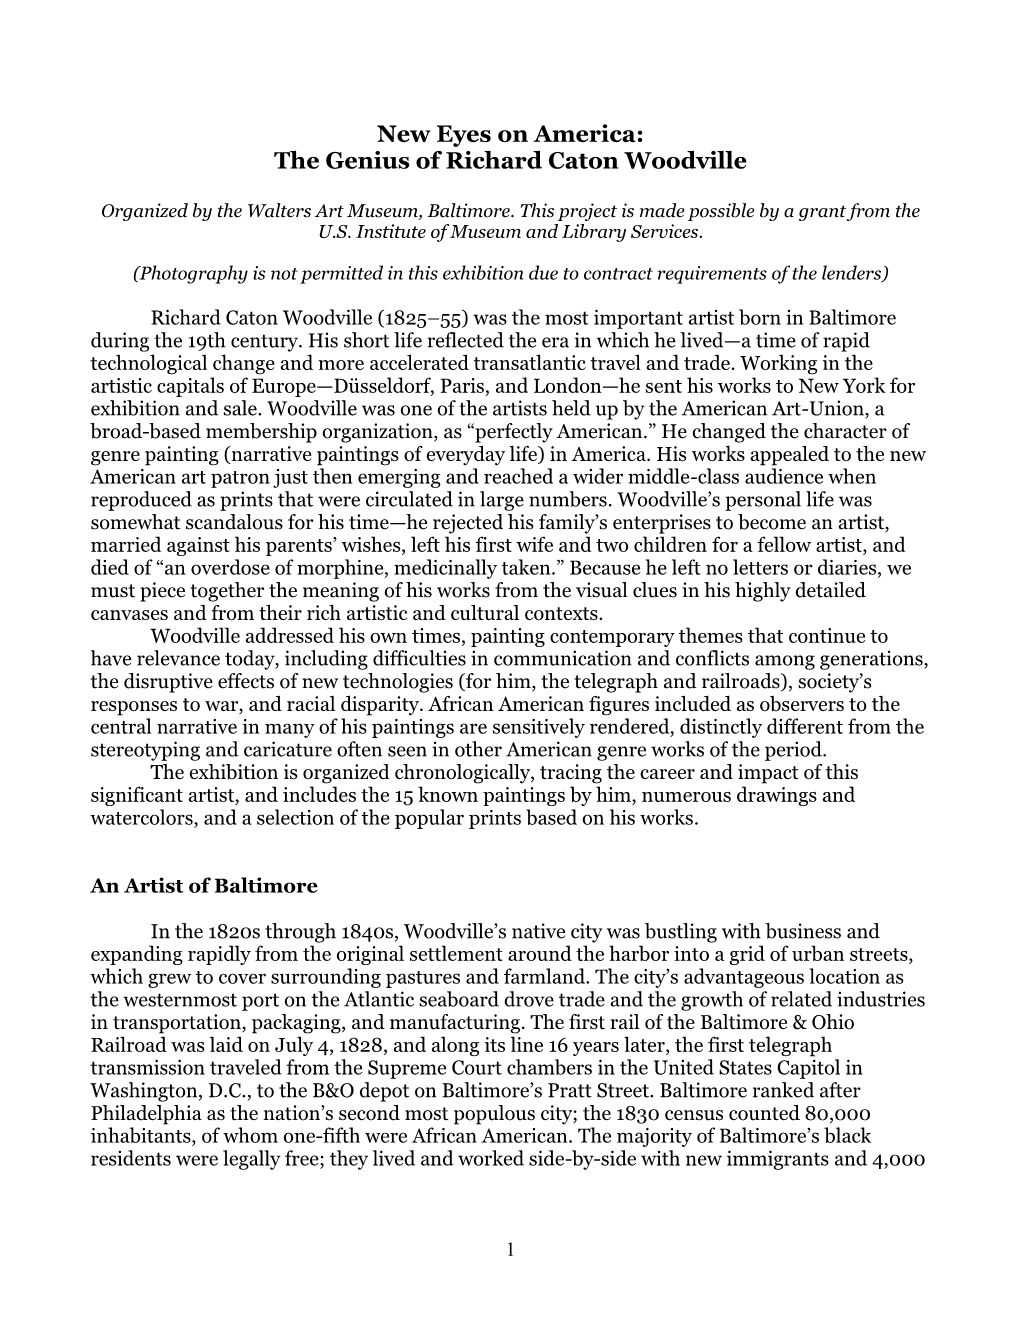 New Eyes on America: the Genius of Richard Caton Woodville